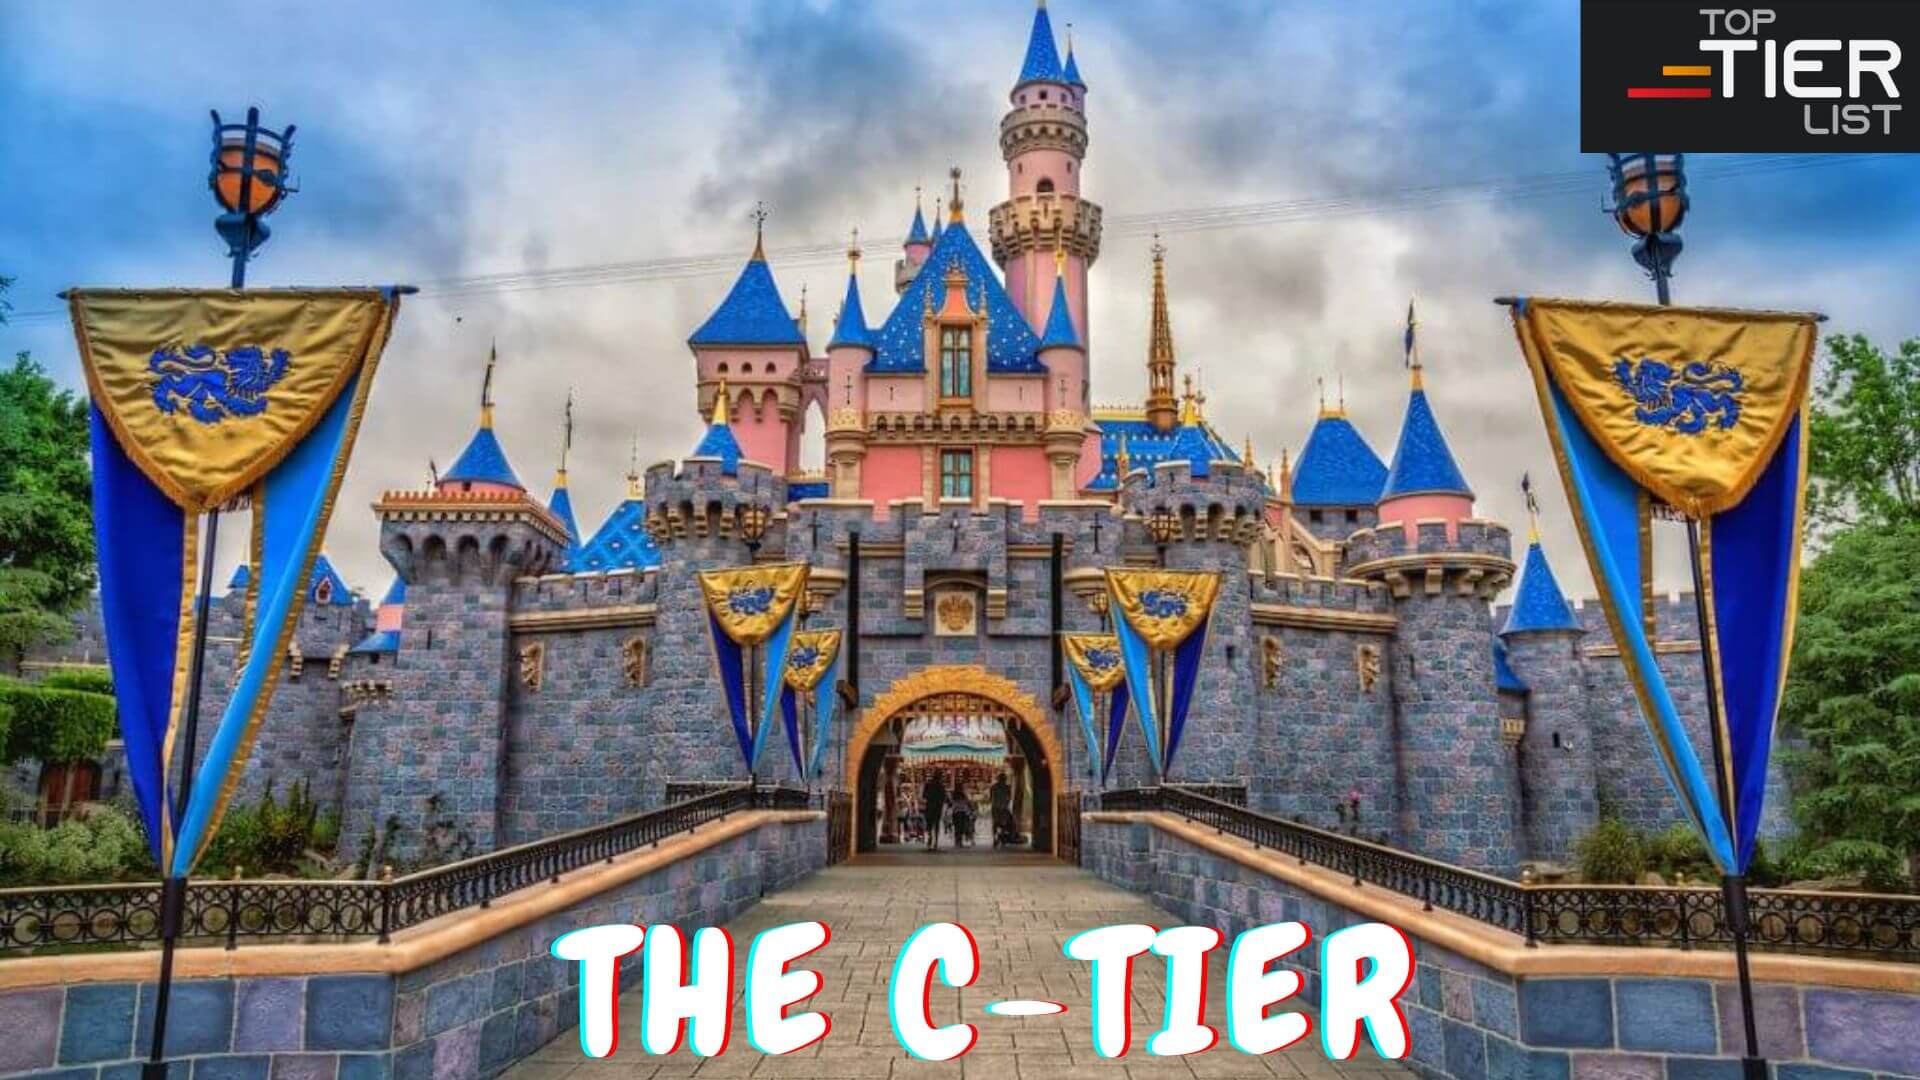 Disneyland tier list